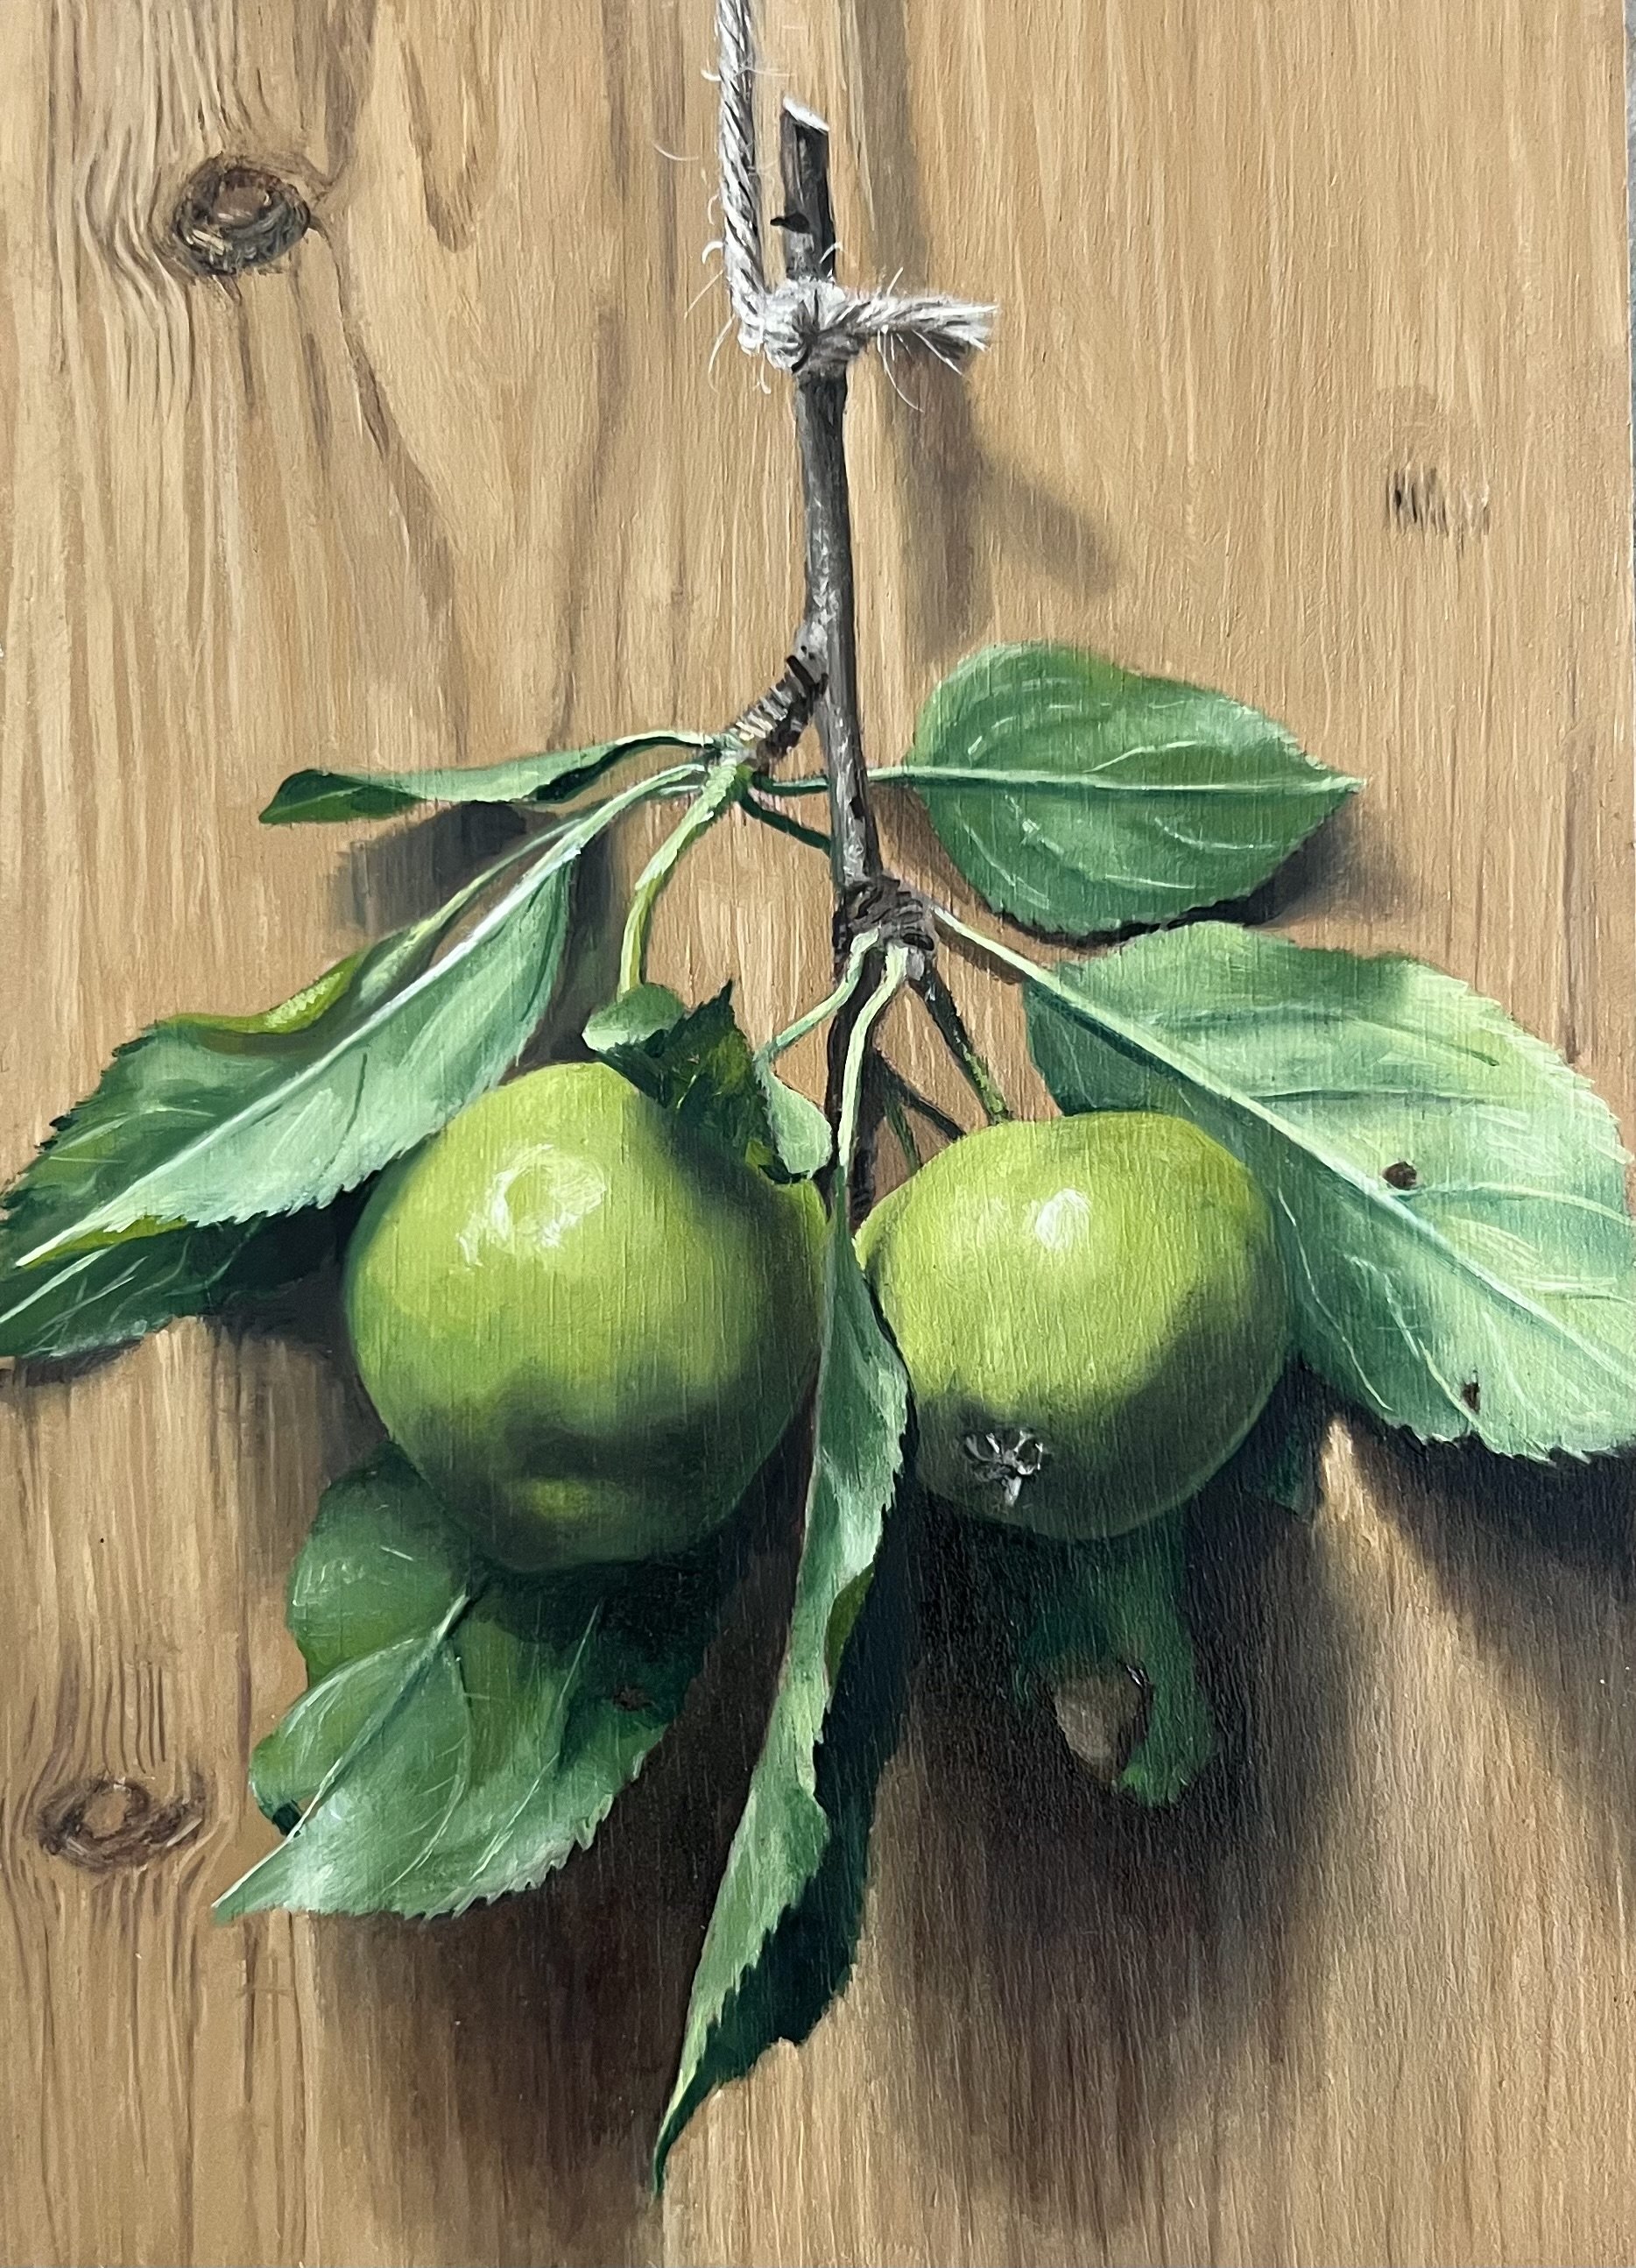 Hanging apples